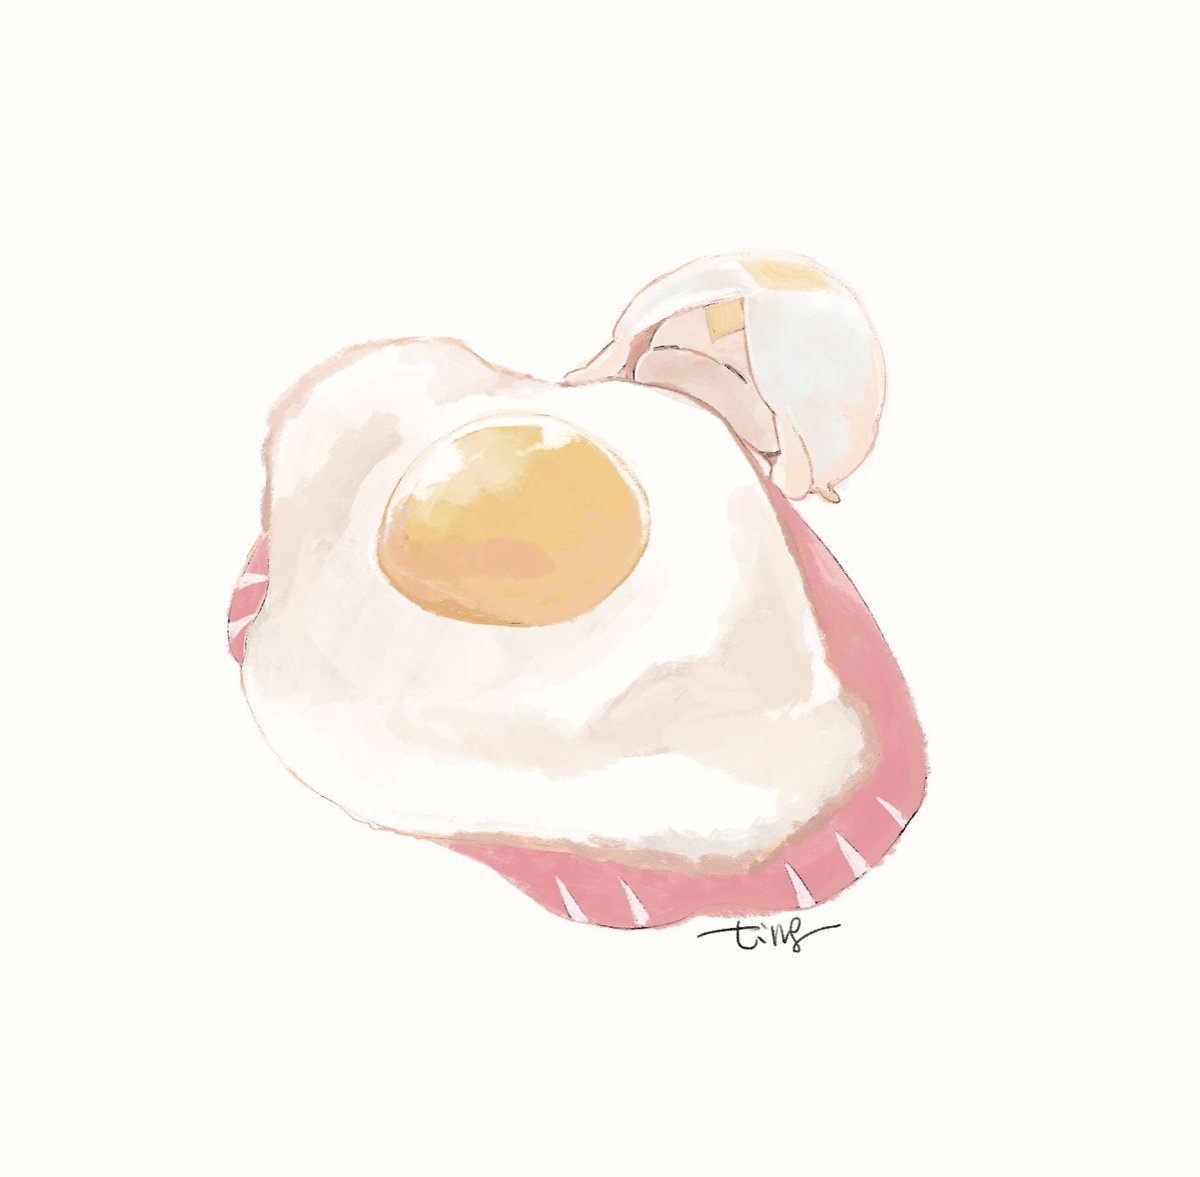 fried egg egg (food) egg food white background simple background signature  illustration images